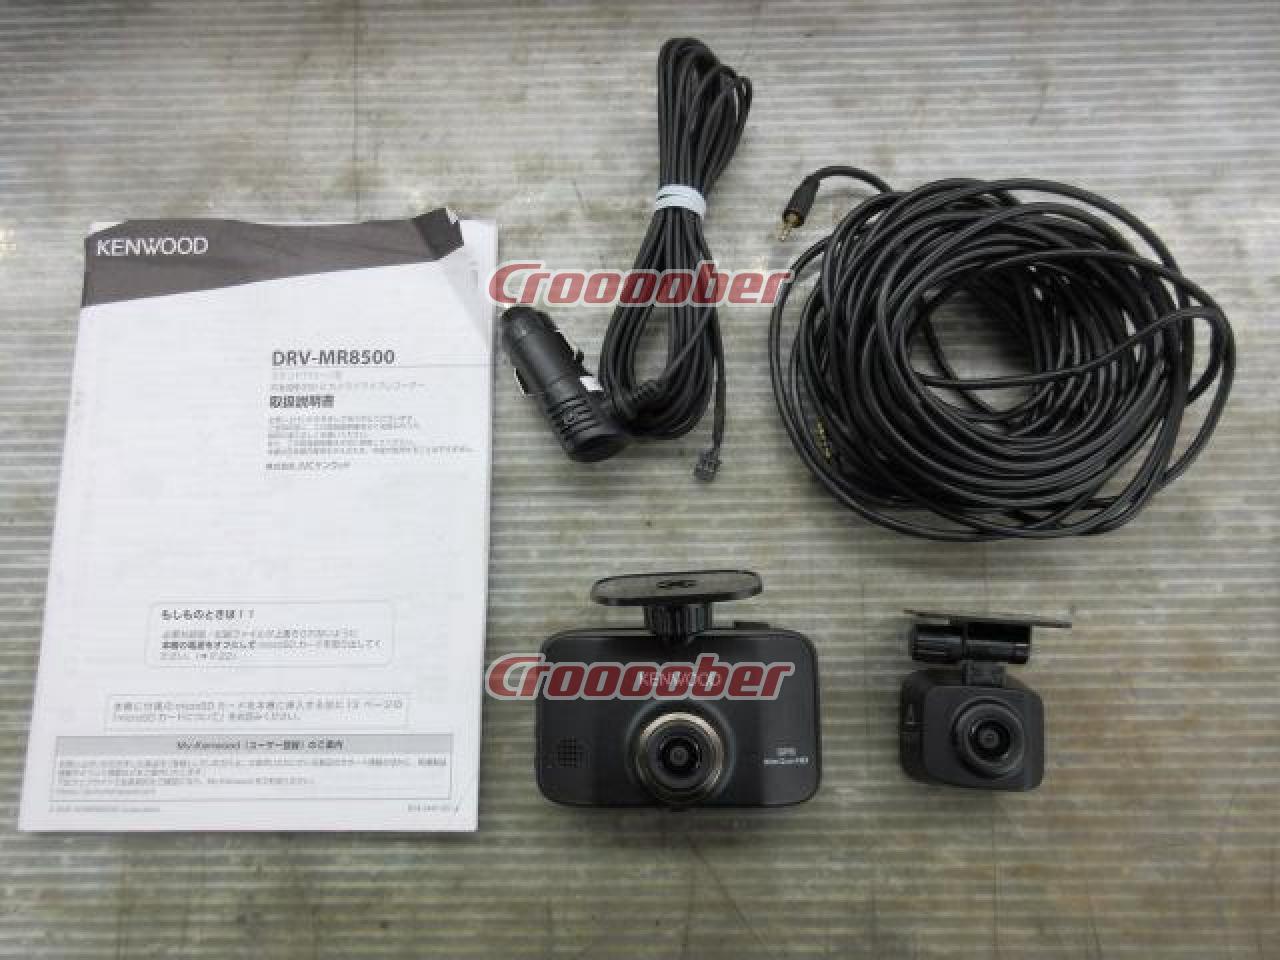 KENWOOD DRV-MR8500 | Drive Recorder | Croooober